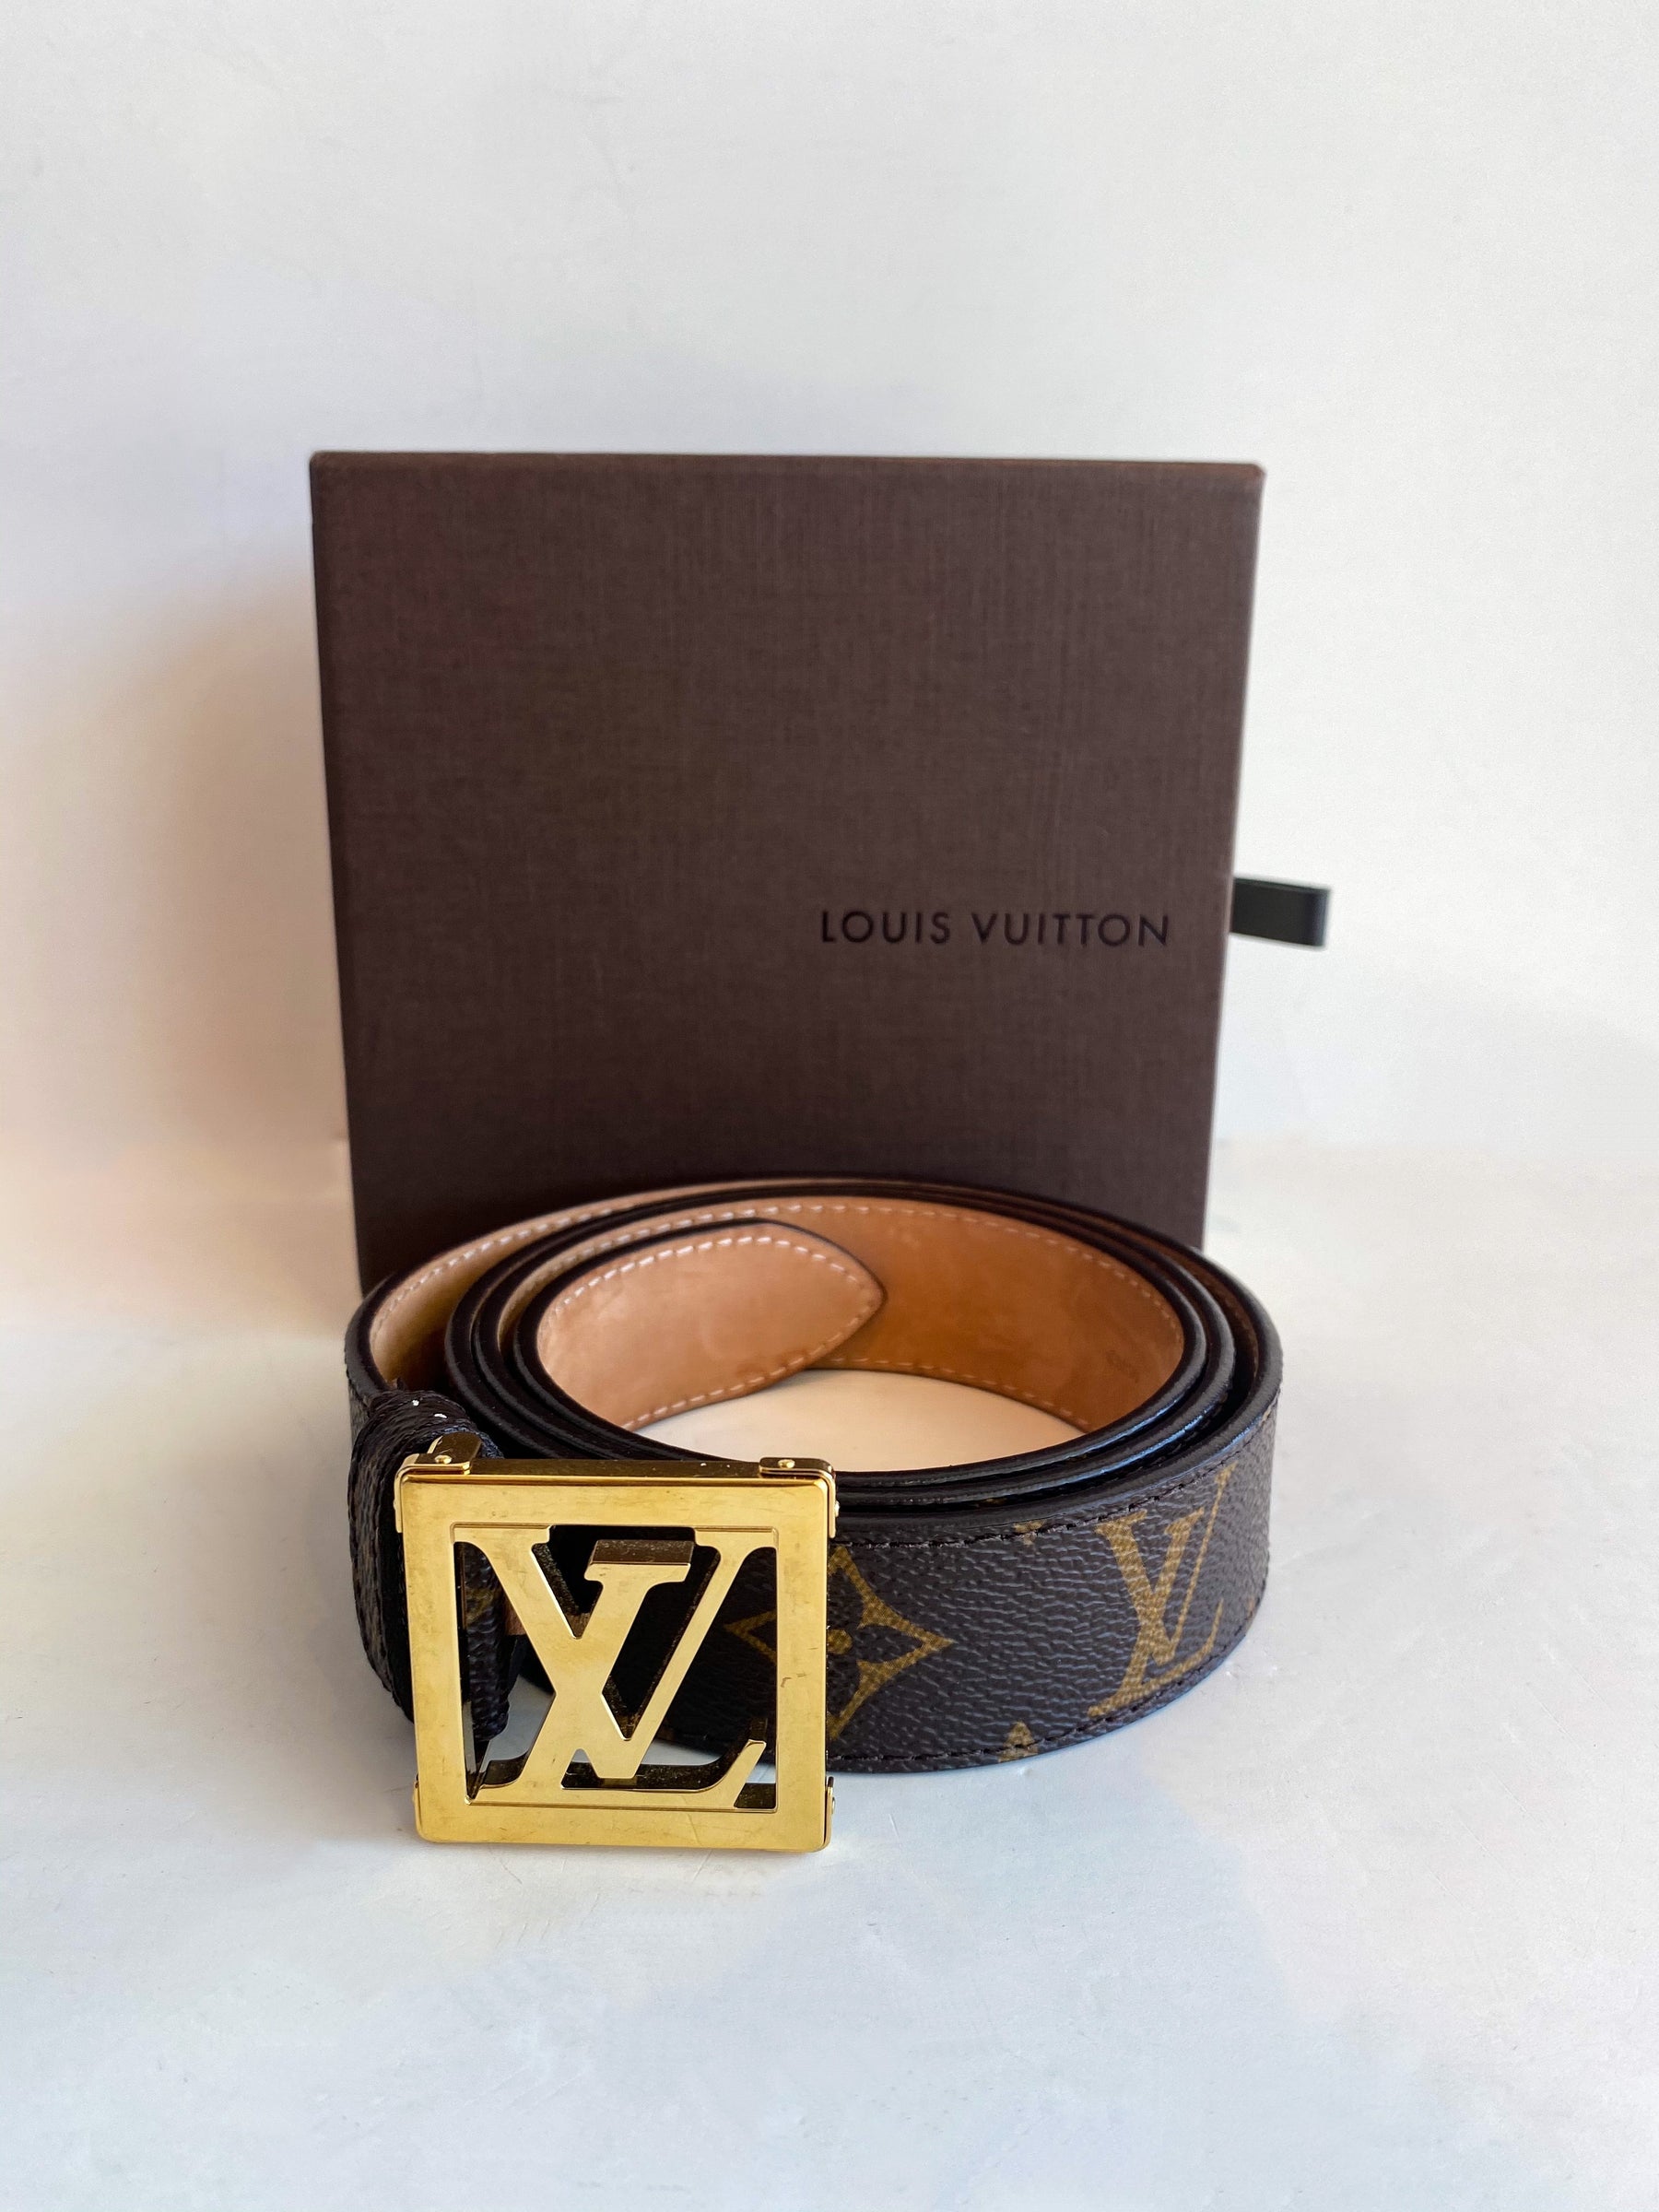 Louis Vuitton Monogram Belt with Box